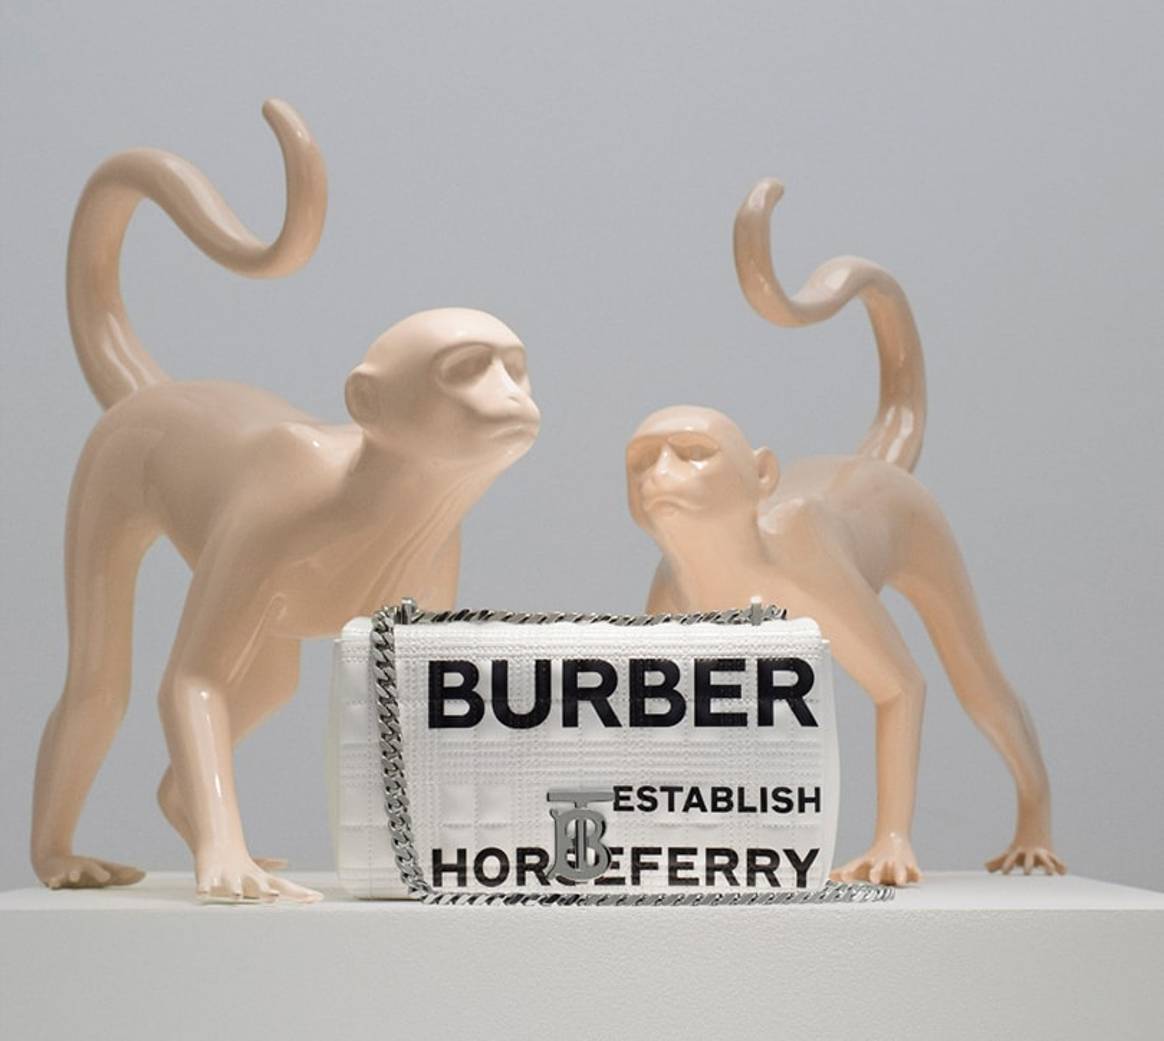 Burberry launching ‘Animal Kingdom’ pop-ups